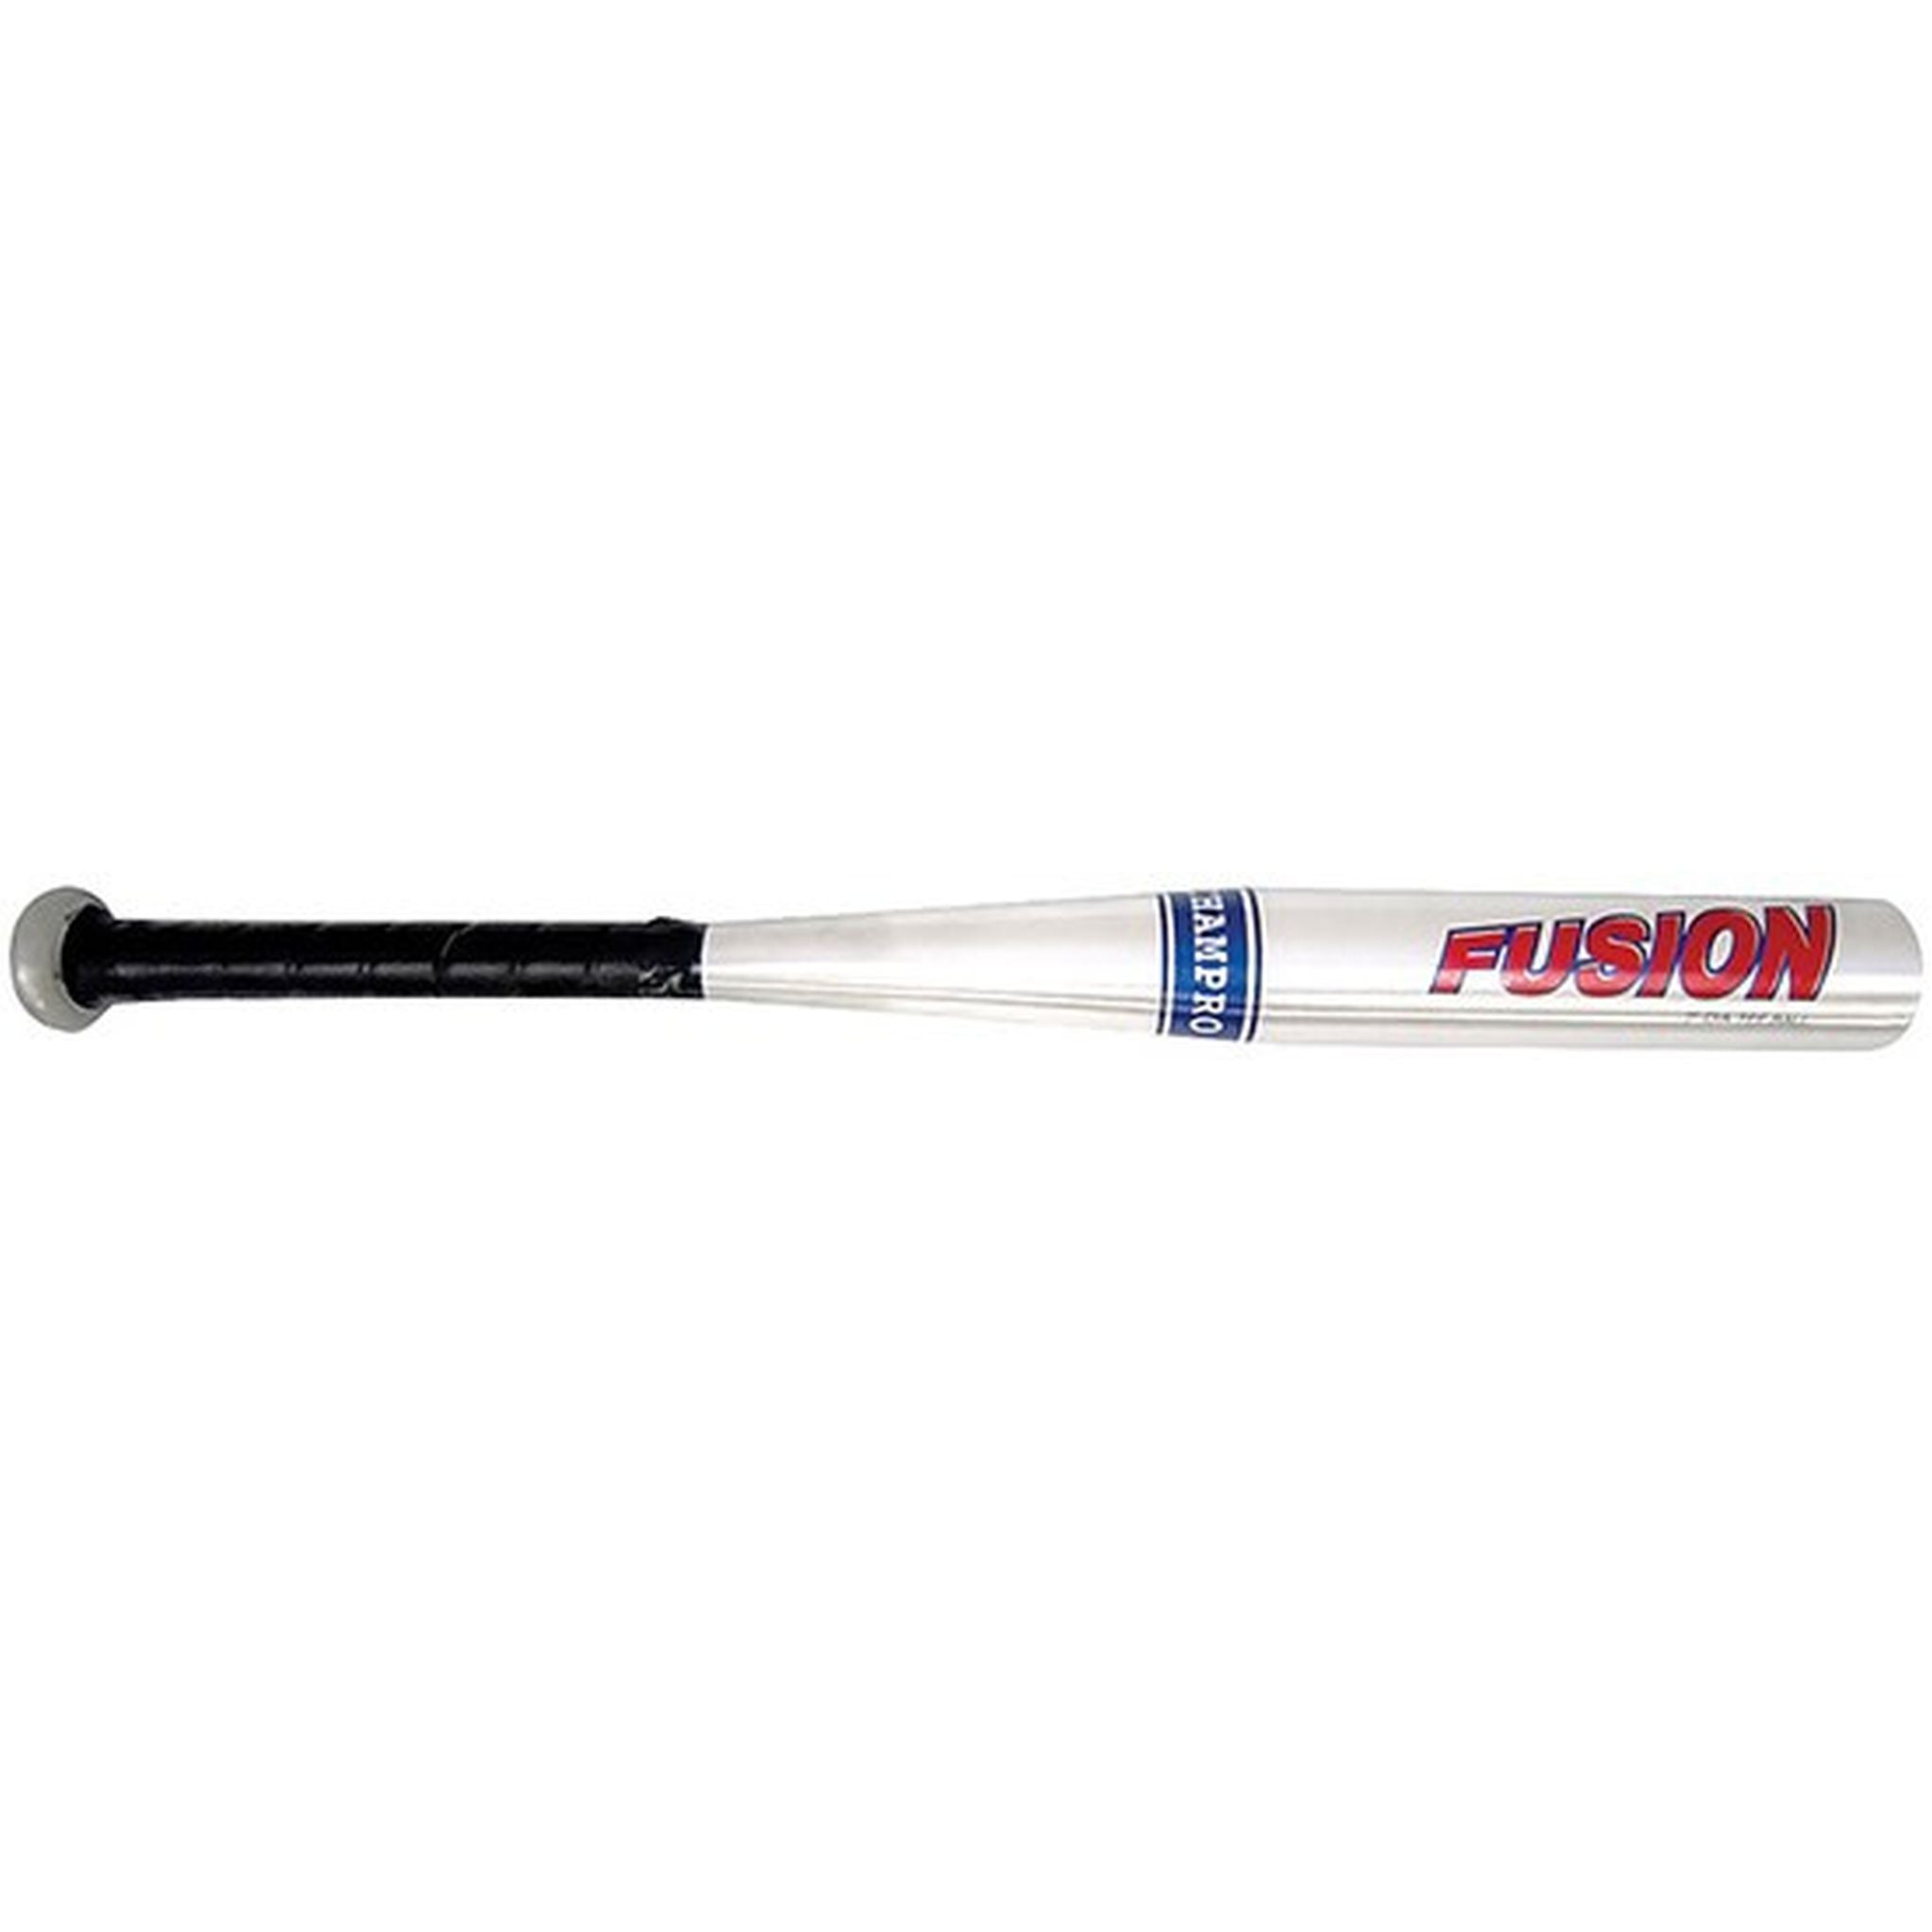 CHAMPRO Alloy Fusion 24-inch Teeball Bat